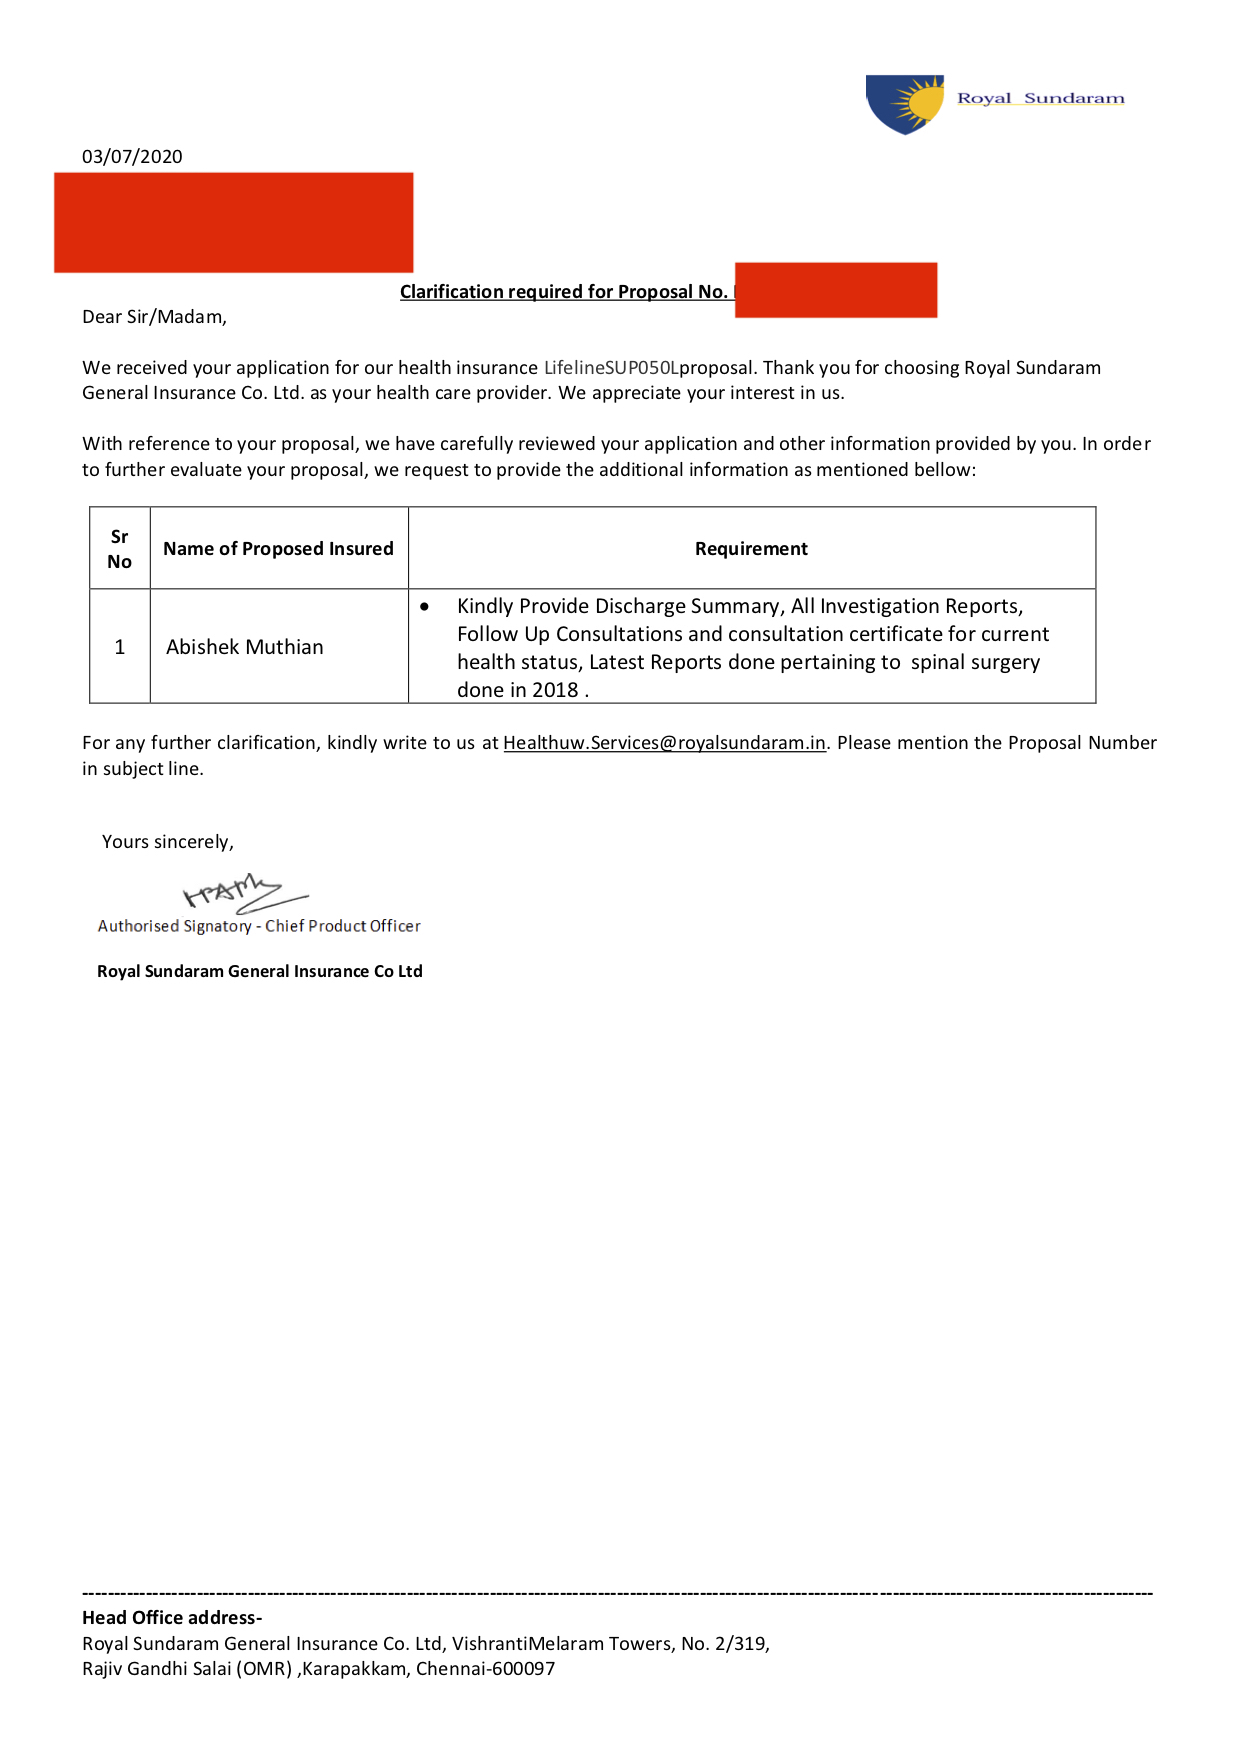 Royal Sundaram Letter asking for futher documents regarding my 2018 surgery